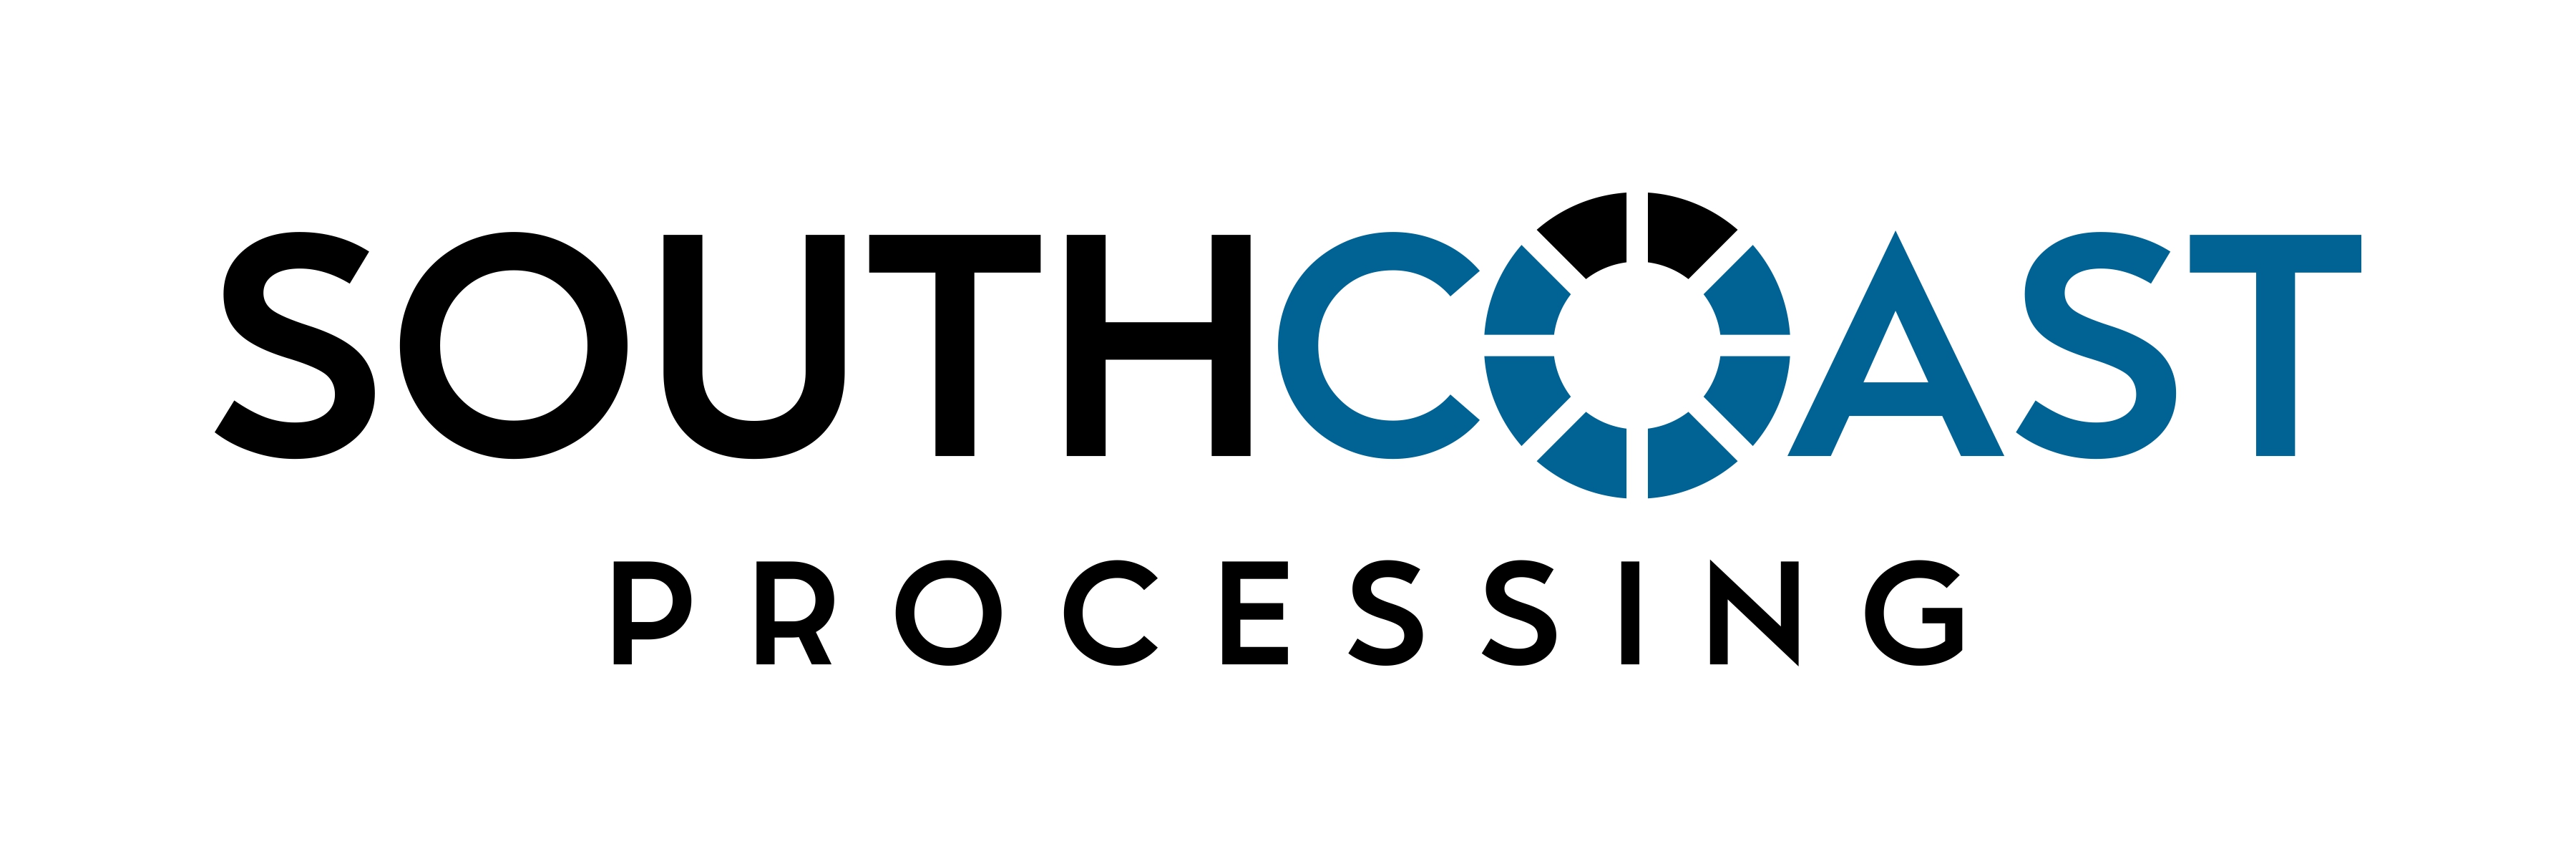 Southcoast Processing Logo